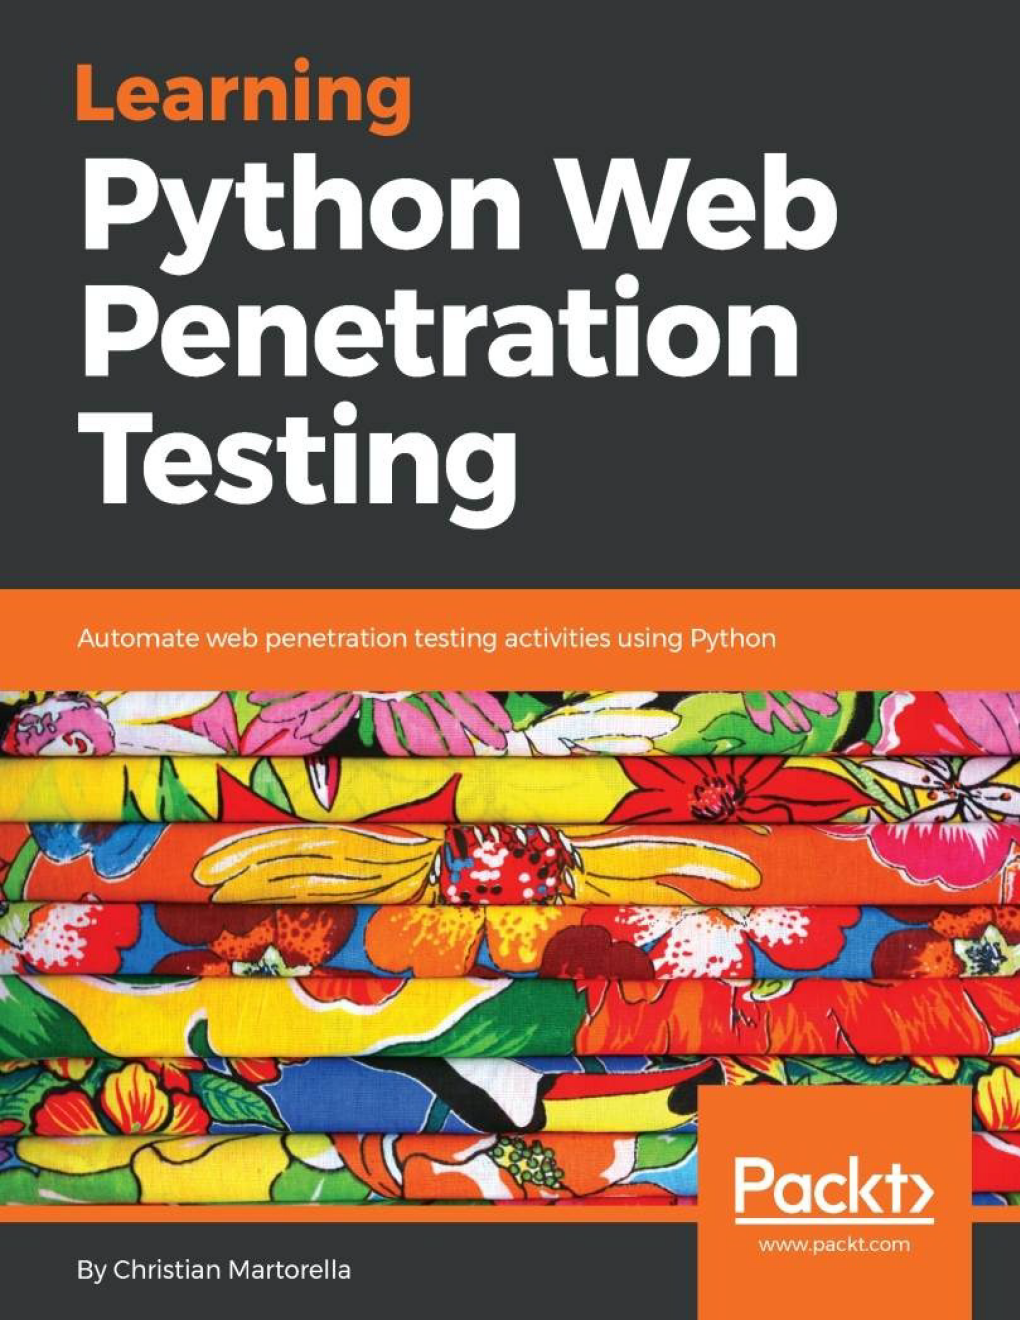 Learning Python Web Penetration - Christian Martorella_01.png